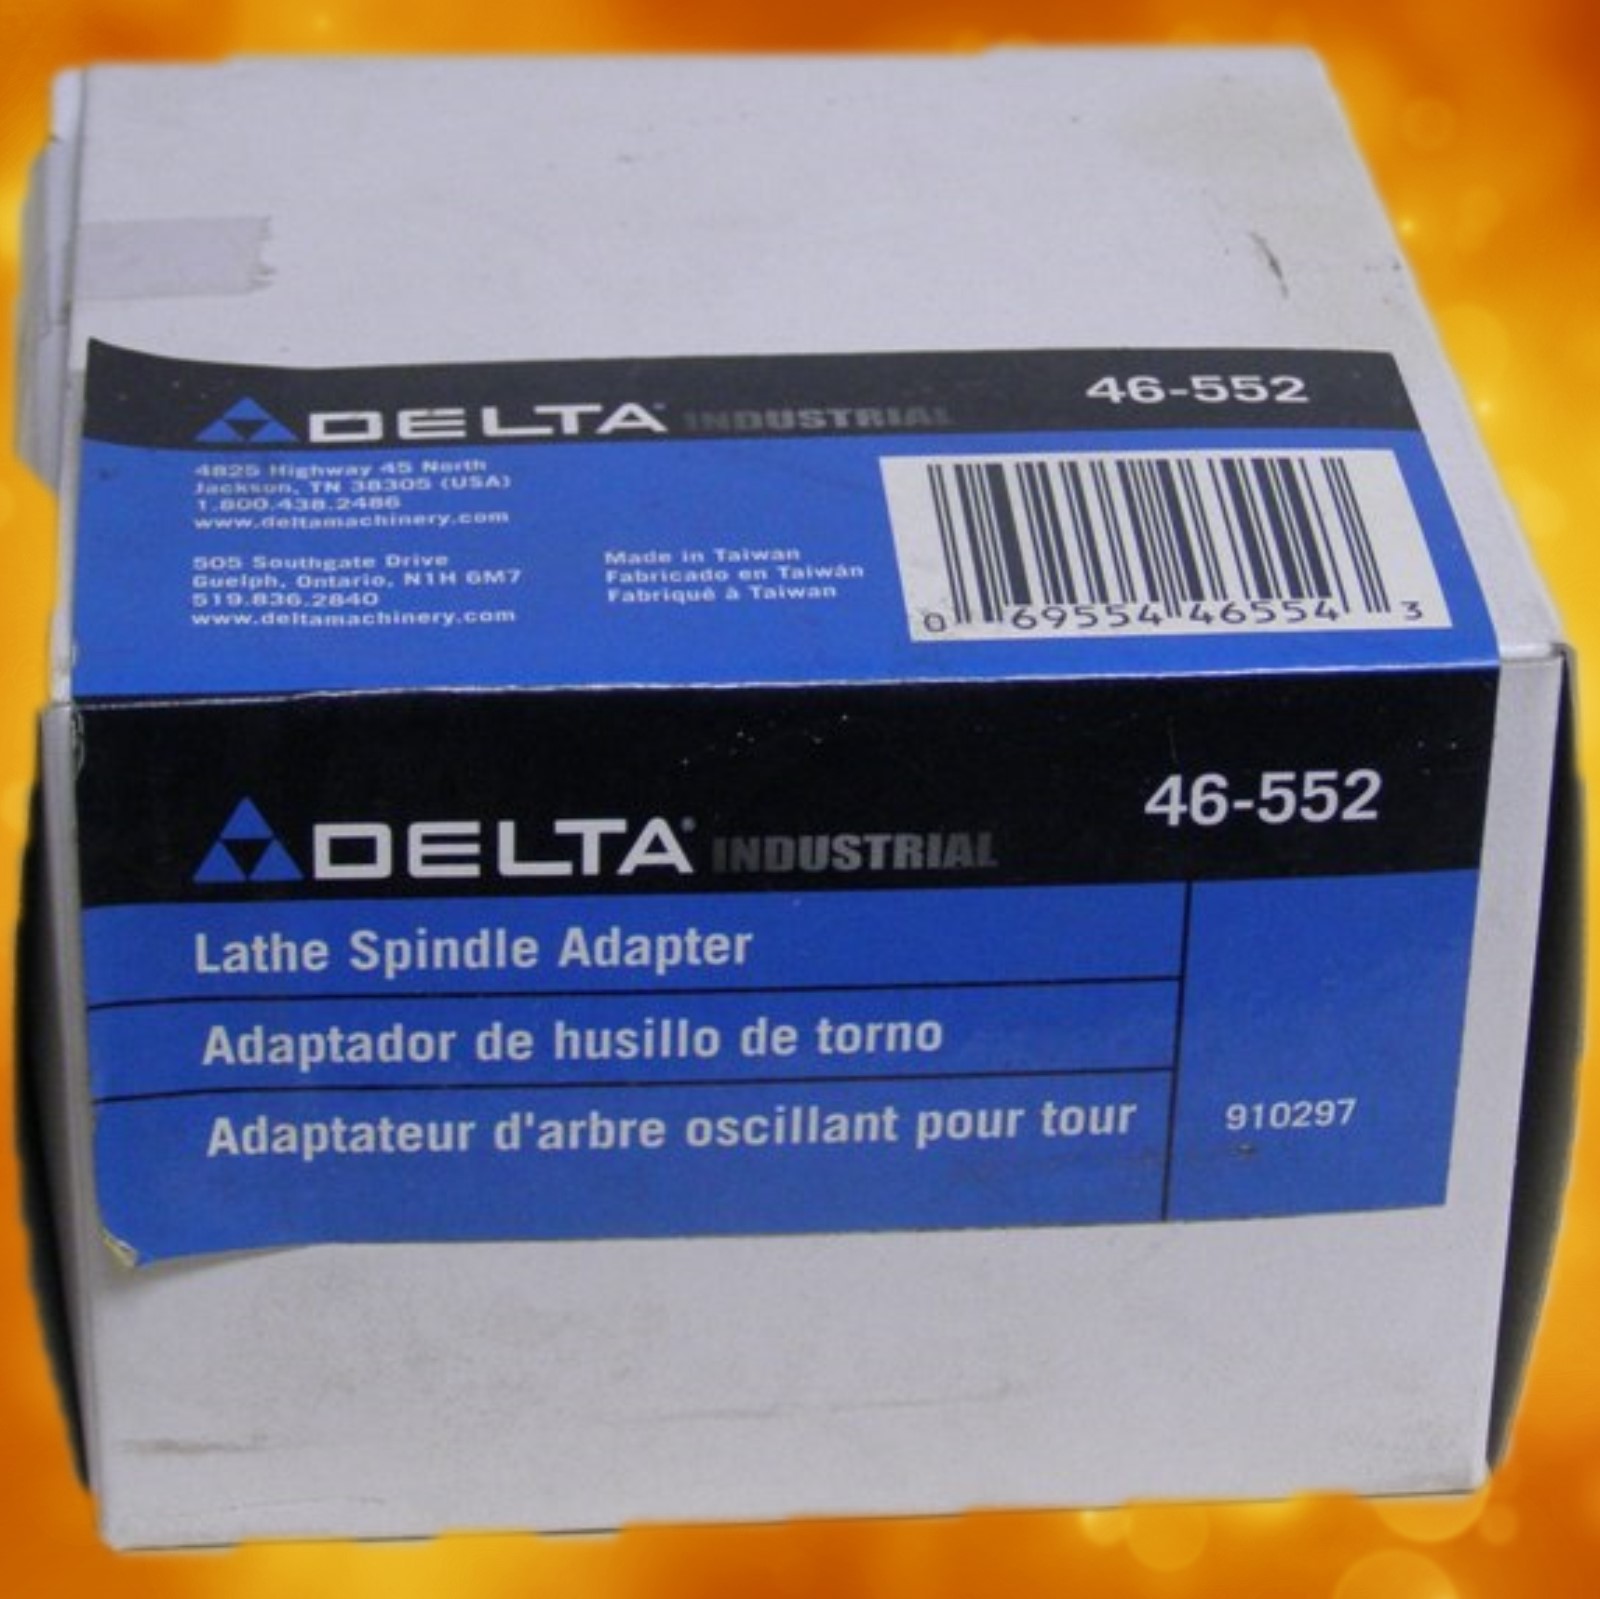 Delta Tool Part 46-552 Delta Spindle Adapter
46-552